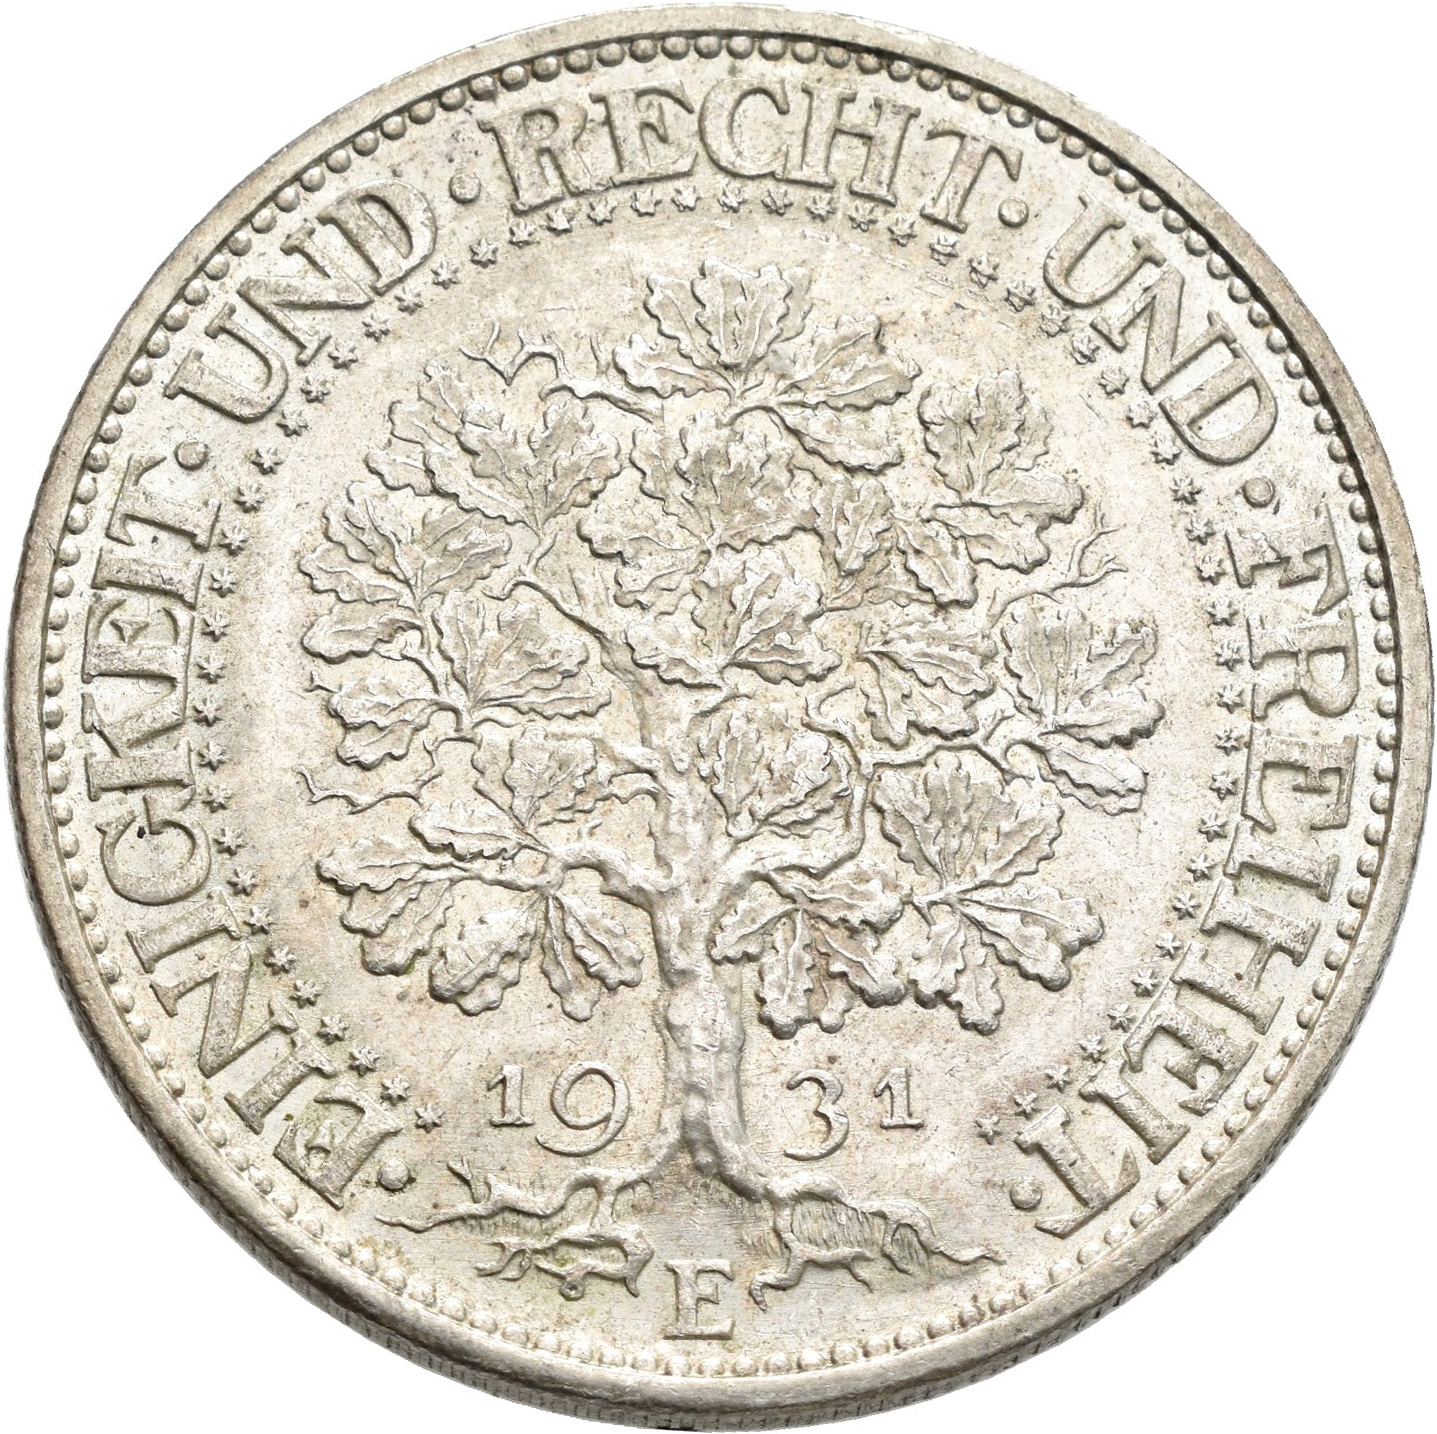 Lot 01616 - Weimarer Republik | Münzen  -  Auktionshaus Christoph Gärtner GmbH & Co. KG 54th AUCTION - Day 1 Coins & Banknotes